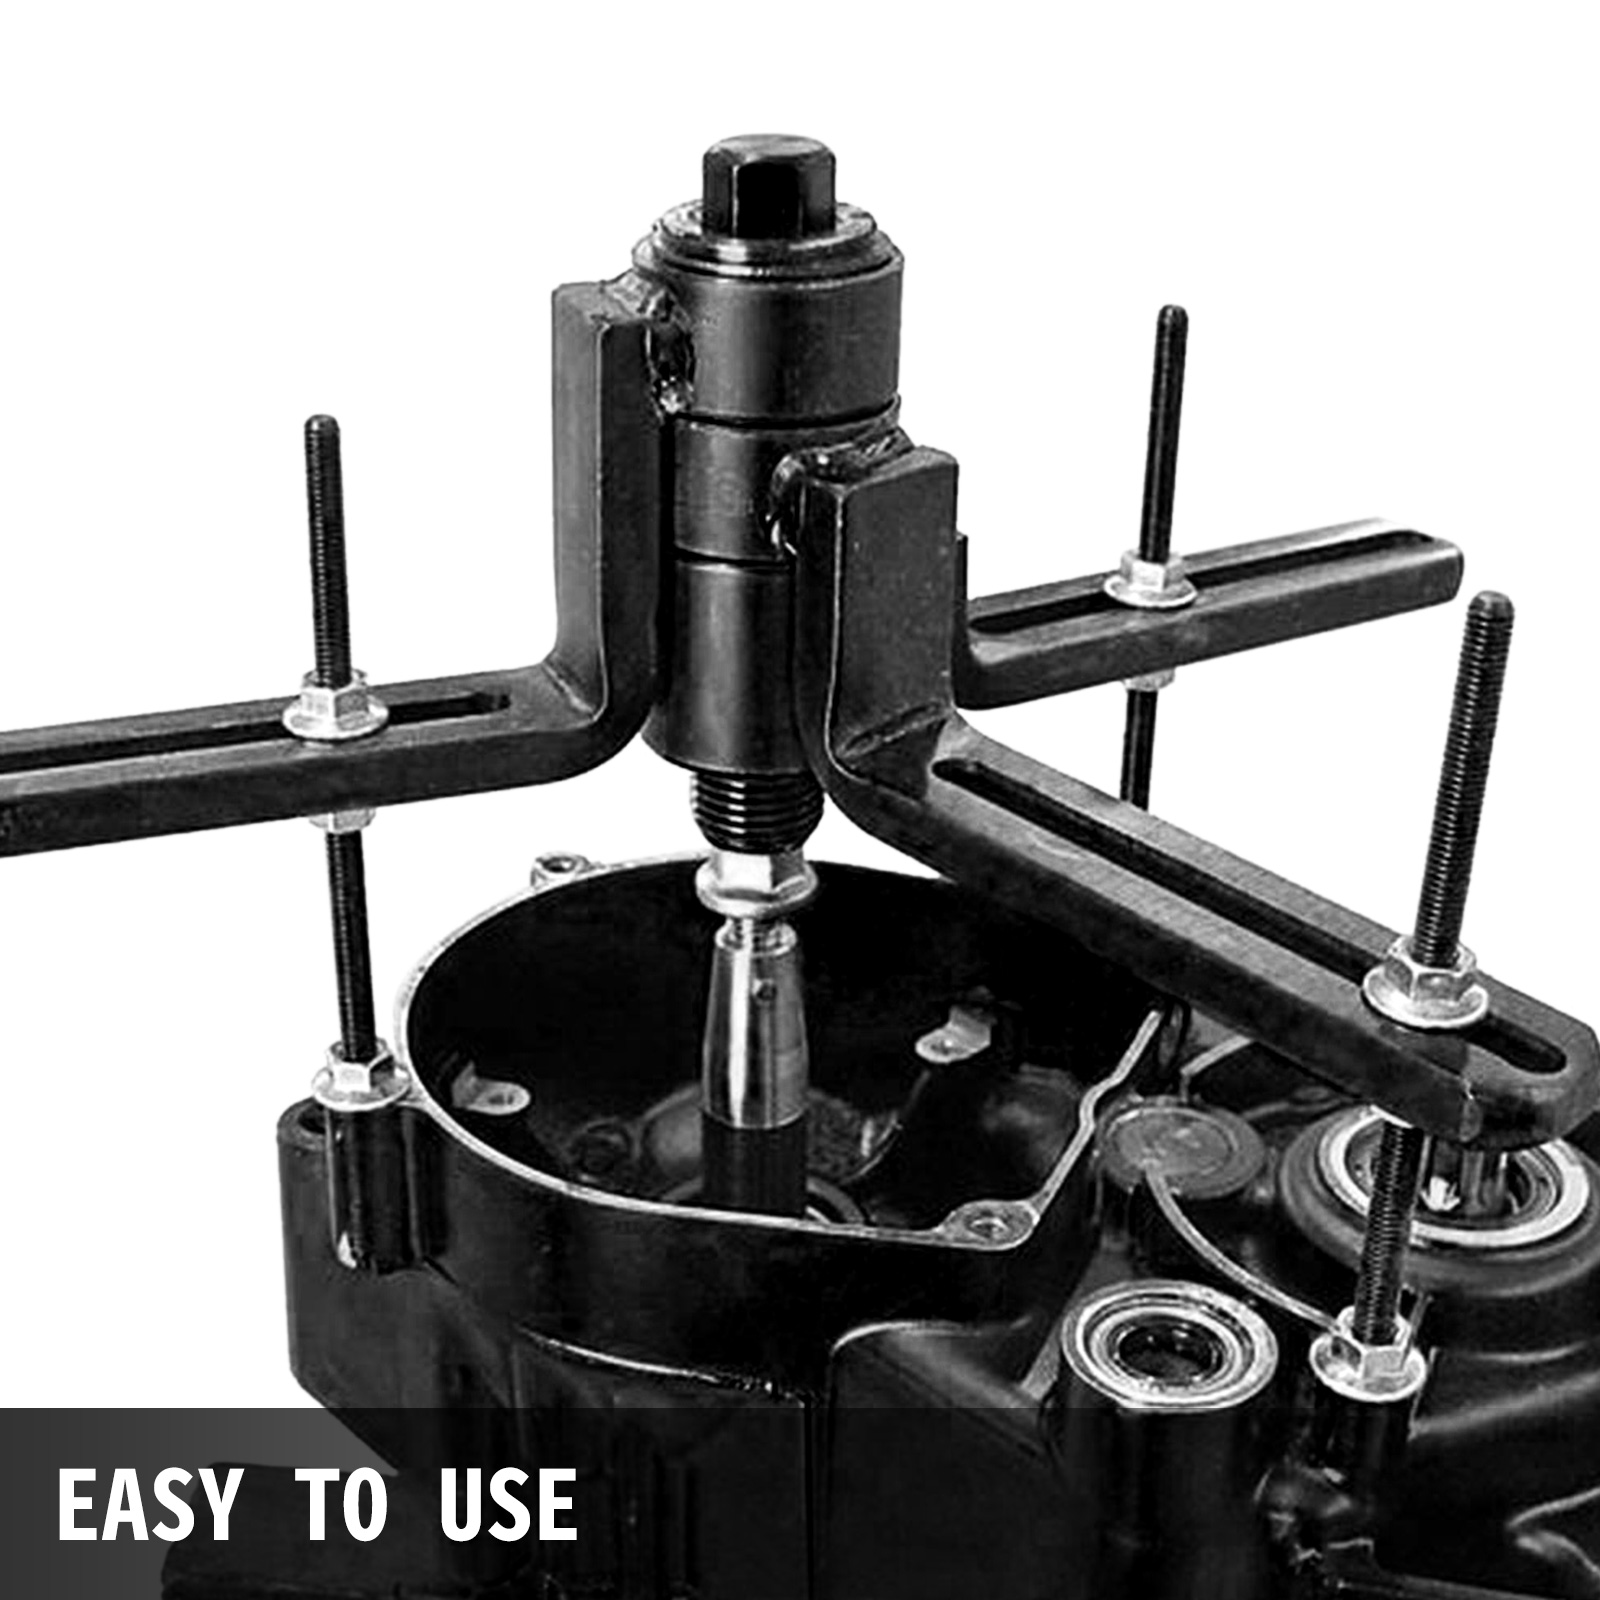 Tool hub 9097 Motorcycle Motorbike Crankcase Crank Case Separator Splitter Set 